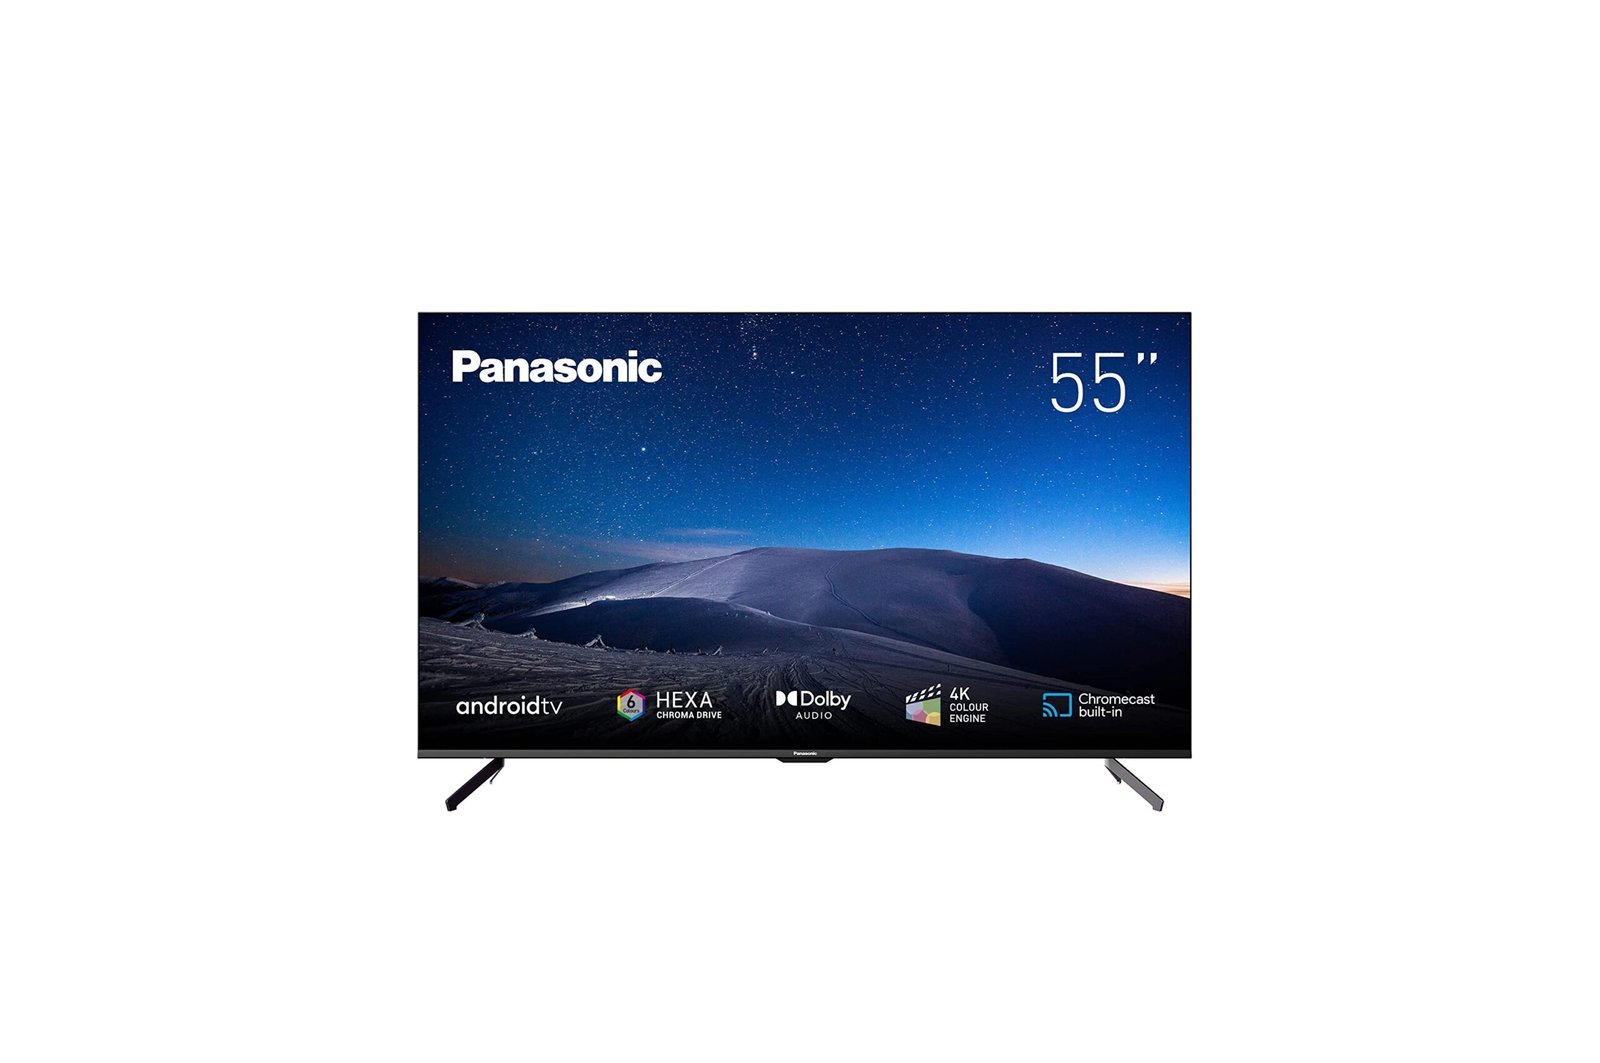 Panasonic 55 Inch Android Smart TV Color Black Model- TH-55HX750M | 1 Year Warranty